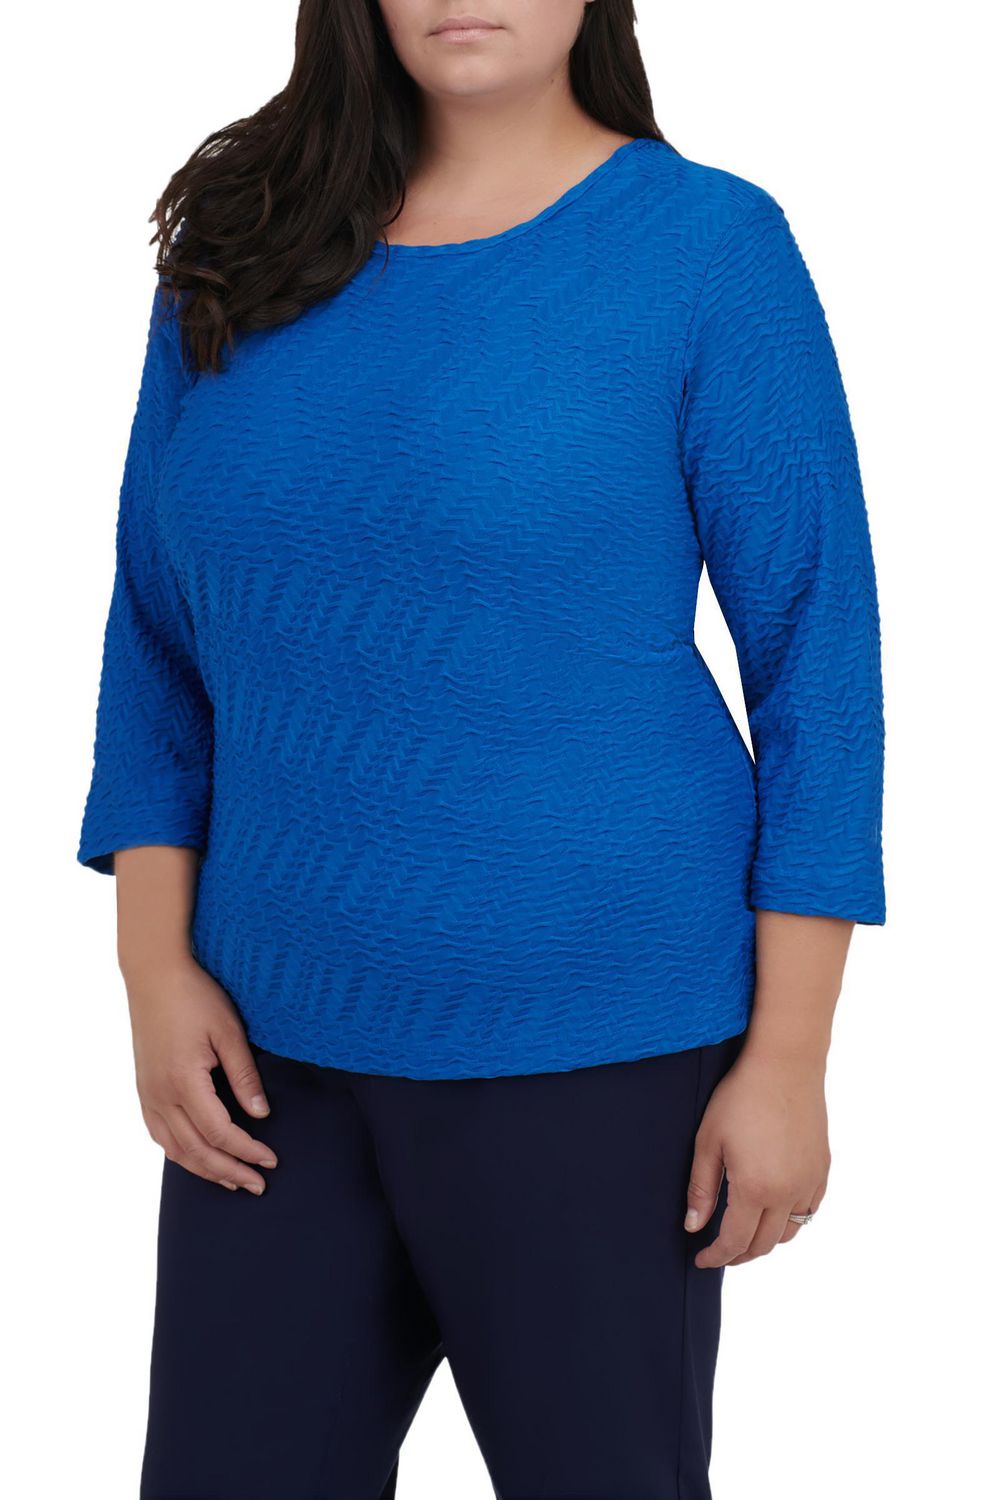 Alia Women's Plus Size Solid Ripple Knit Top | Walmart Canada